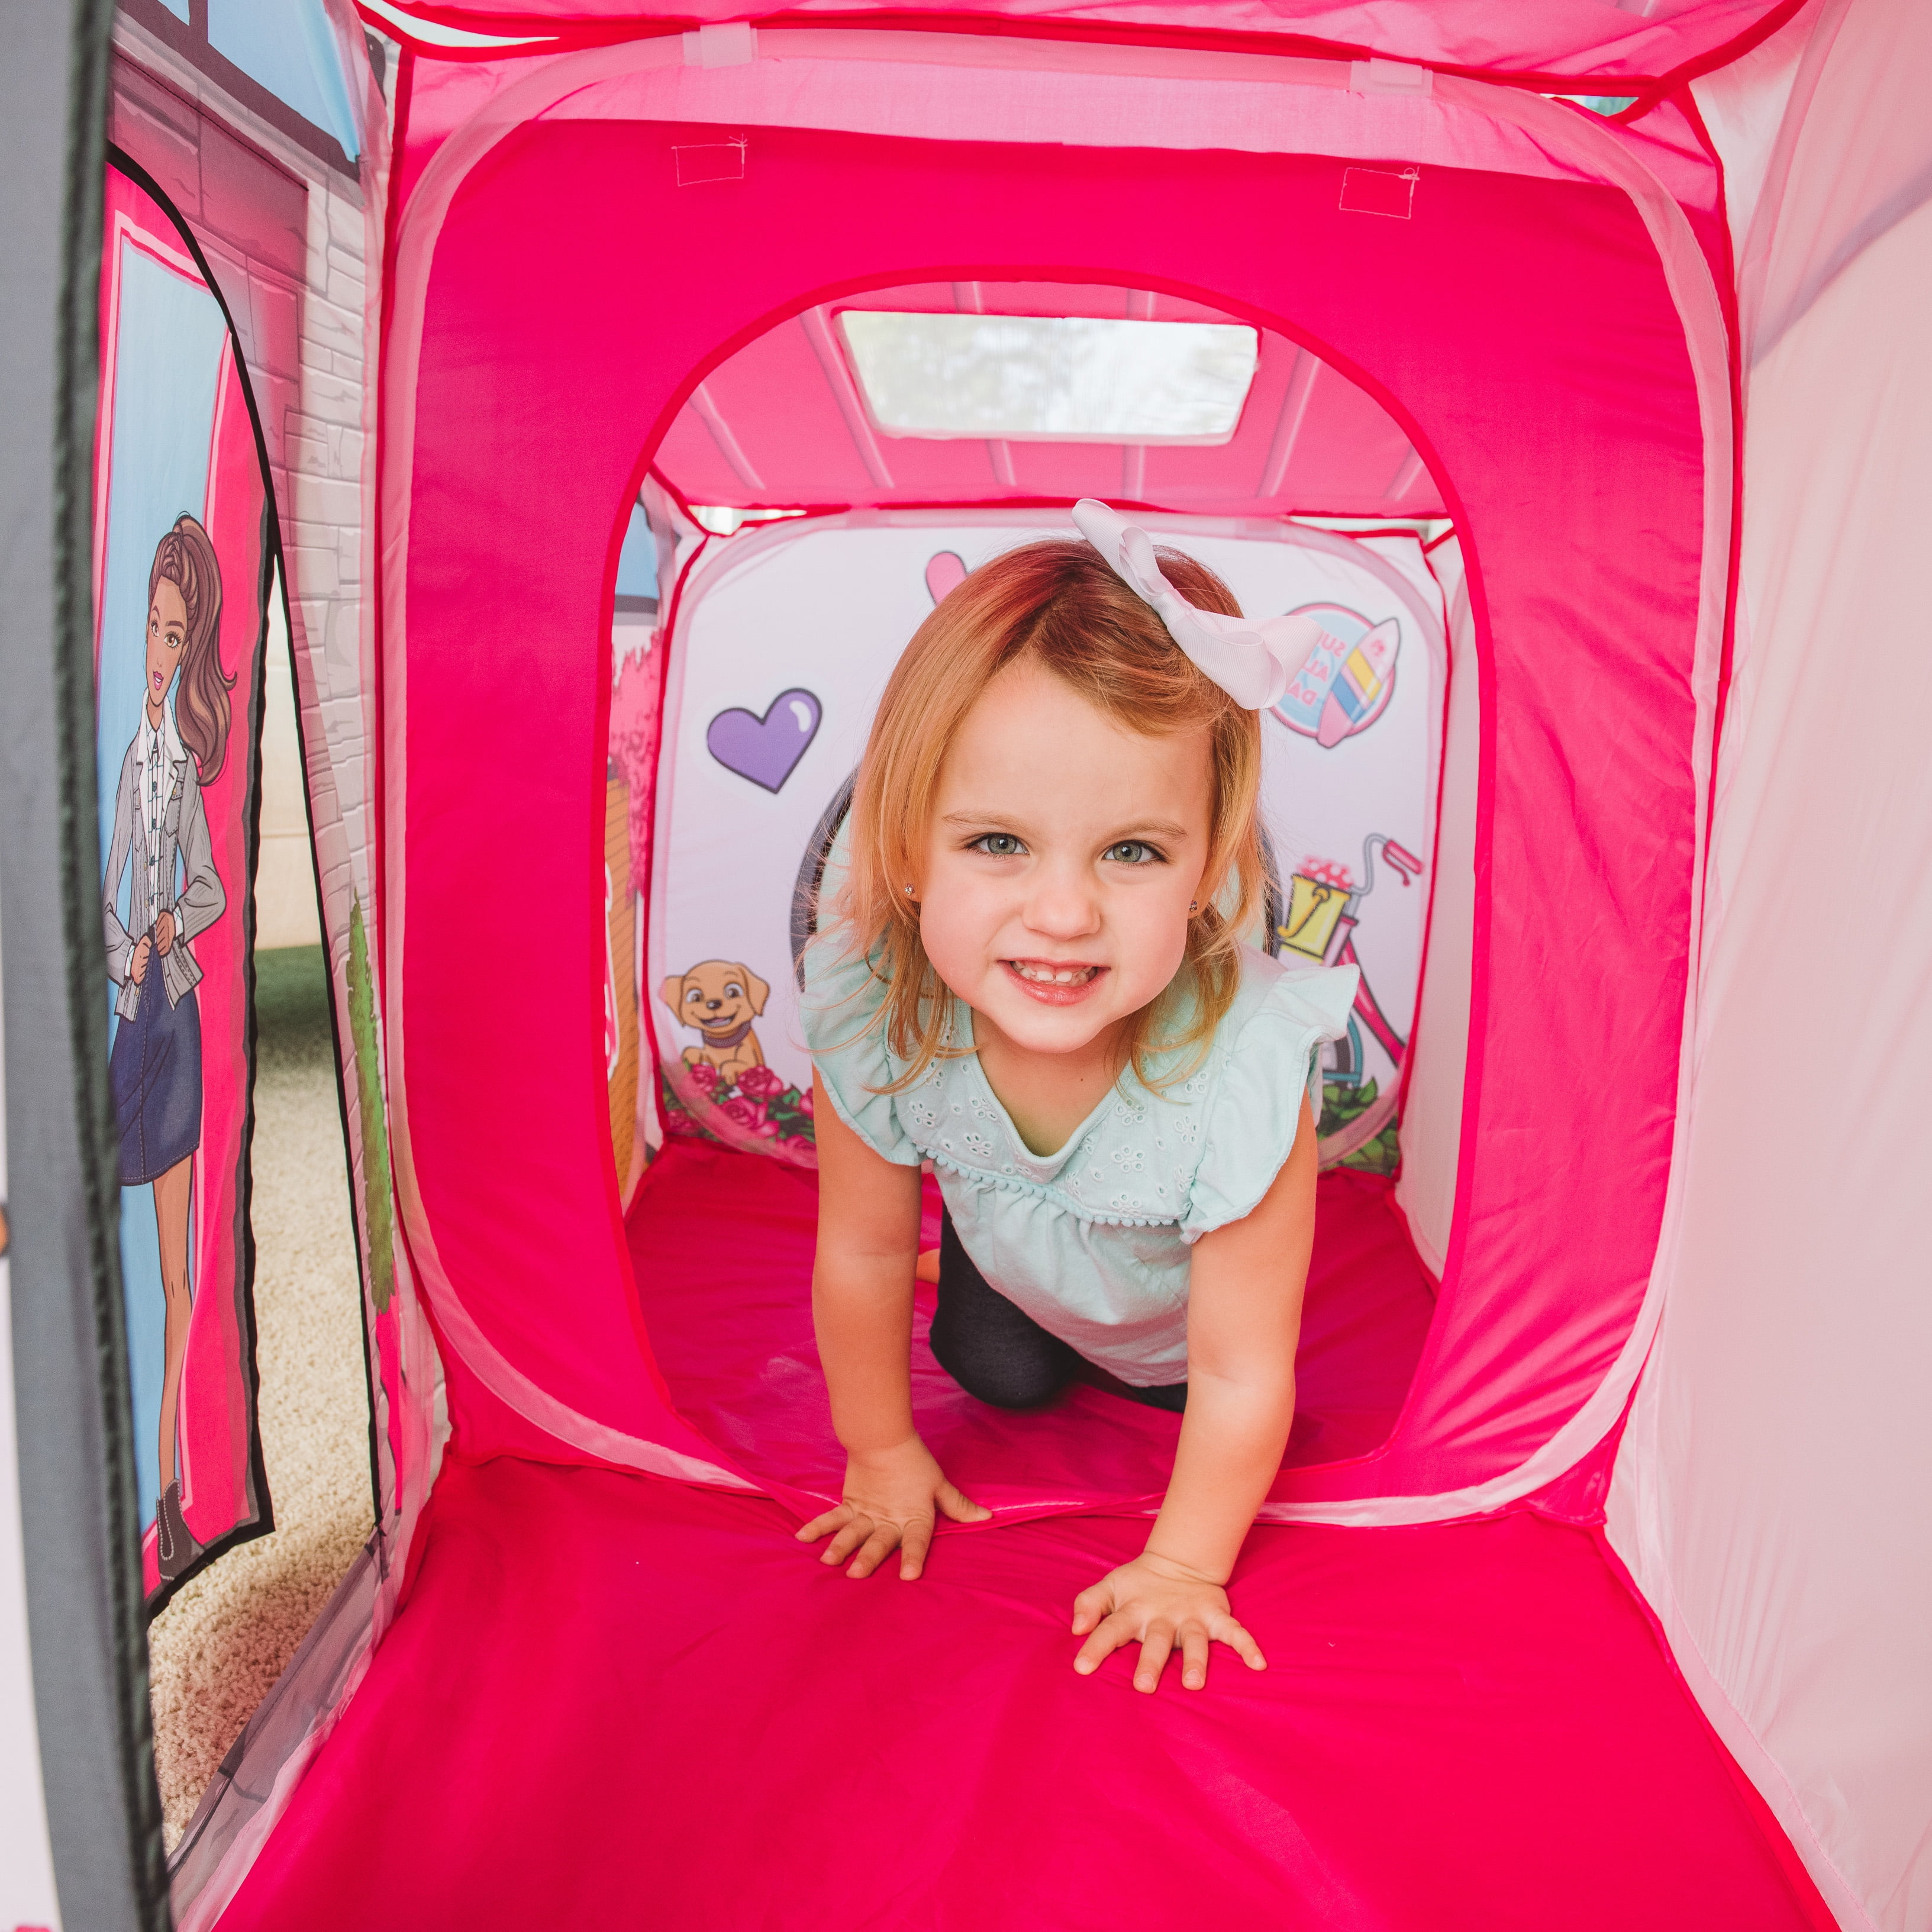 Sunny Days Barbie Dream Camper Pop Up Play Tent, 1 ct - Kroger